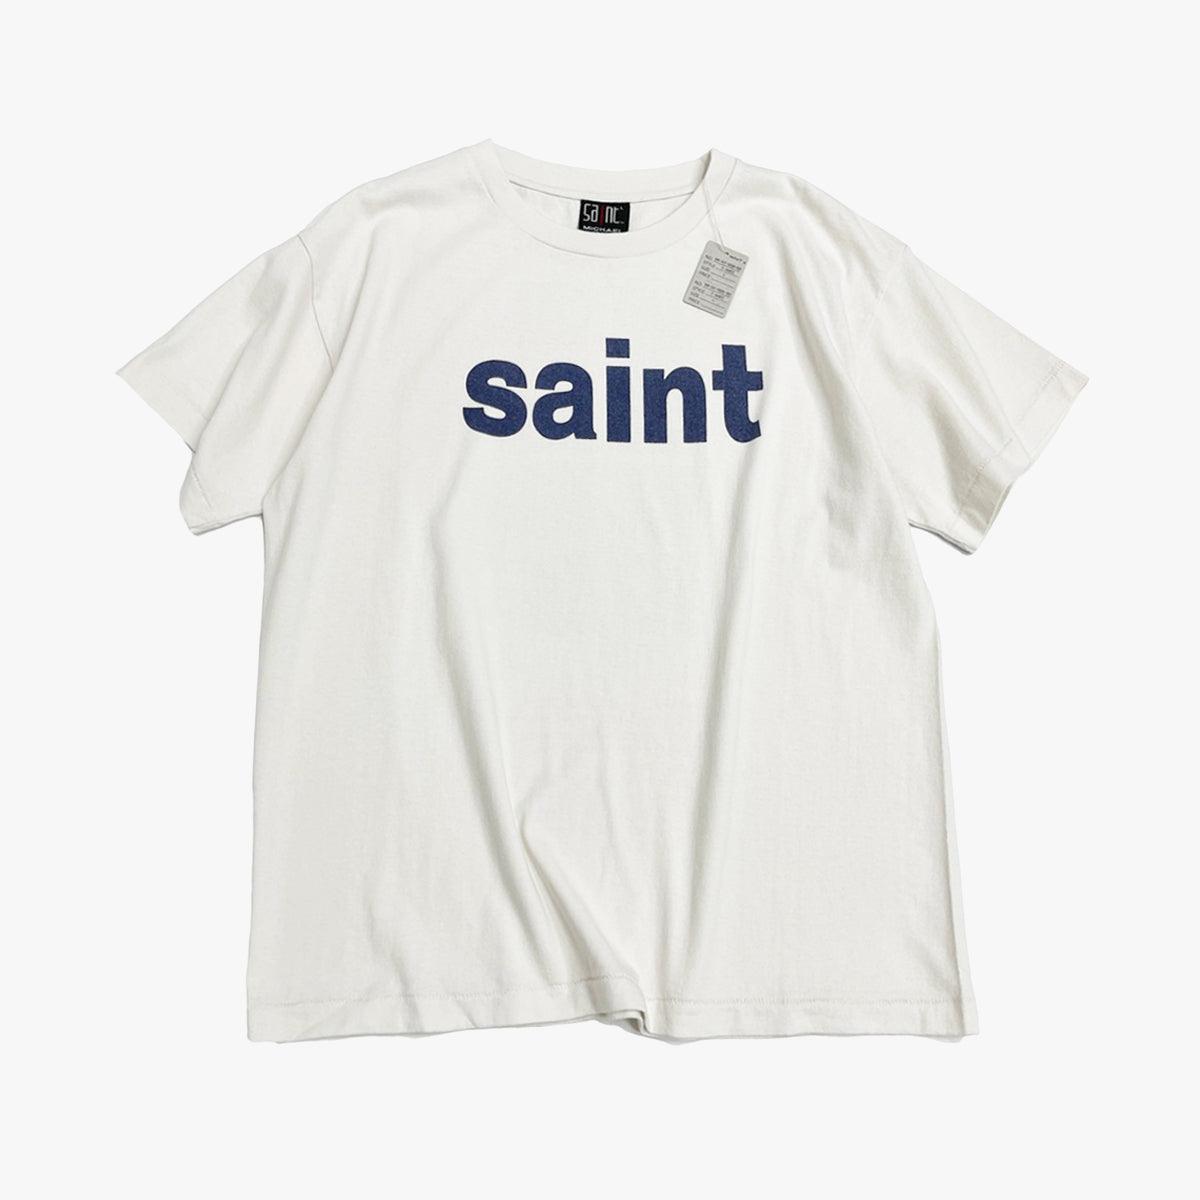 Saint Aesthetic White T-Shirt - Aesthetic Clothes Shop